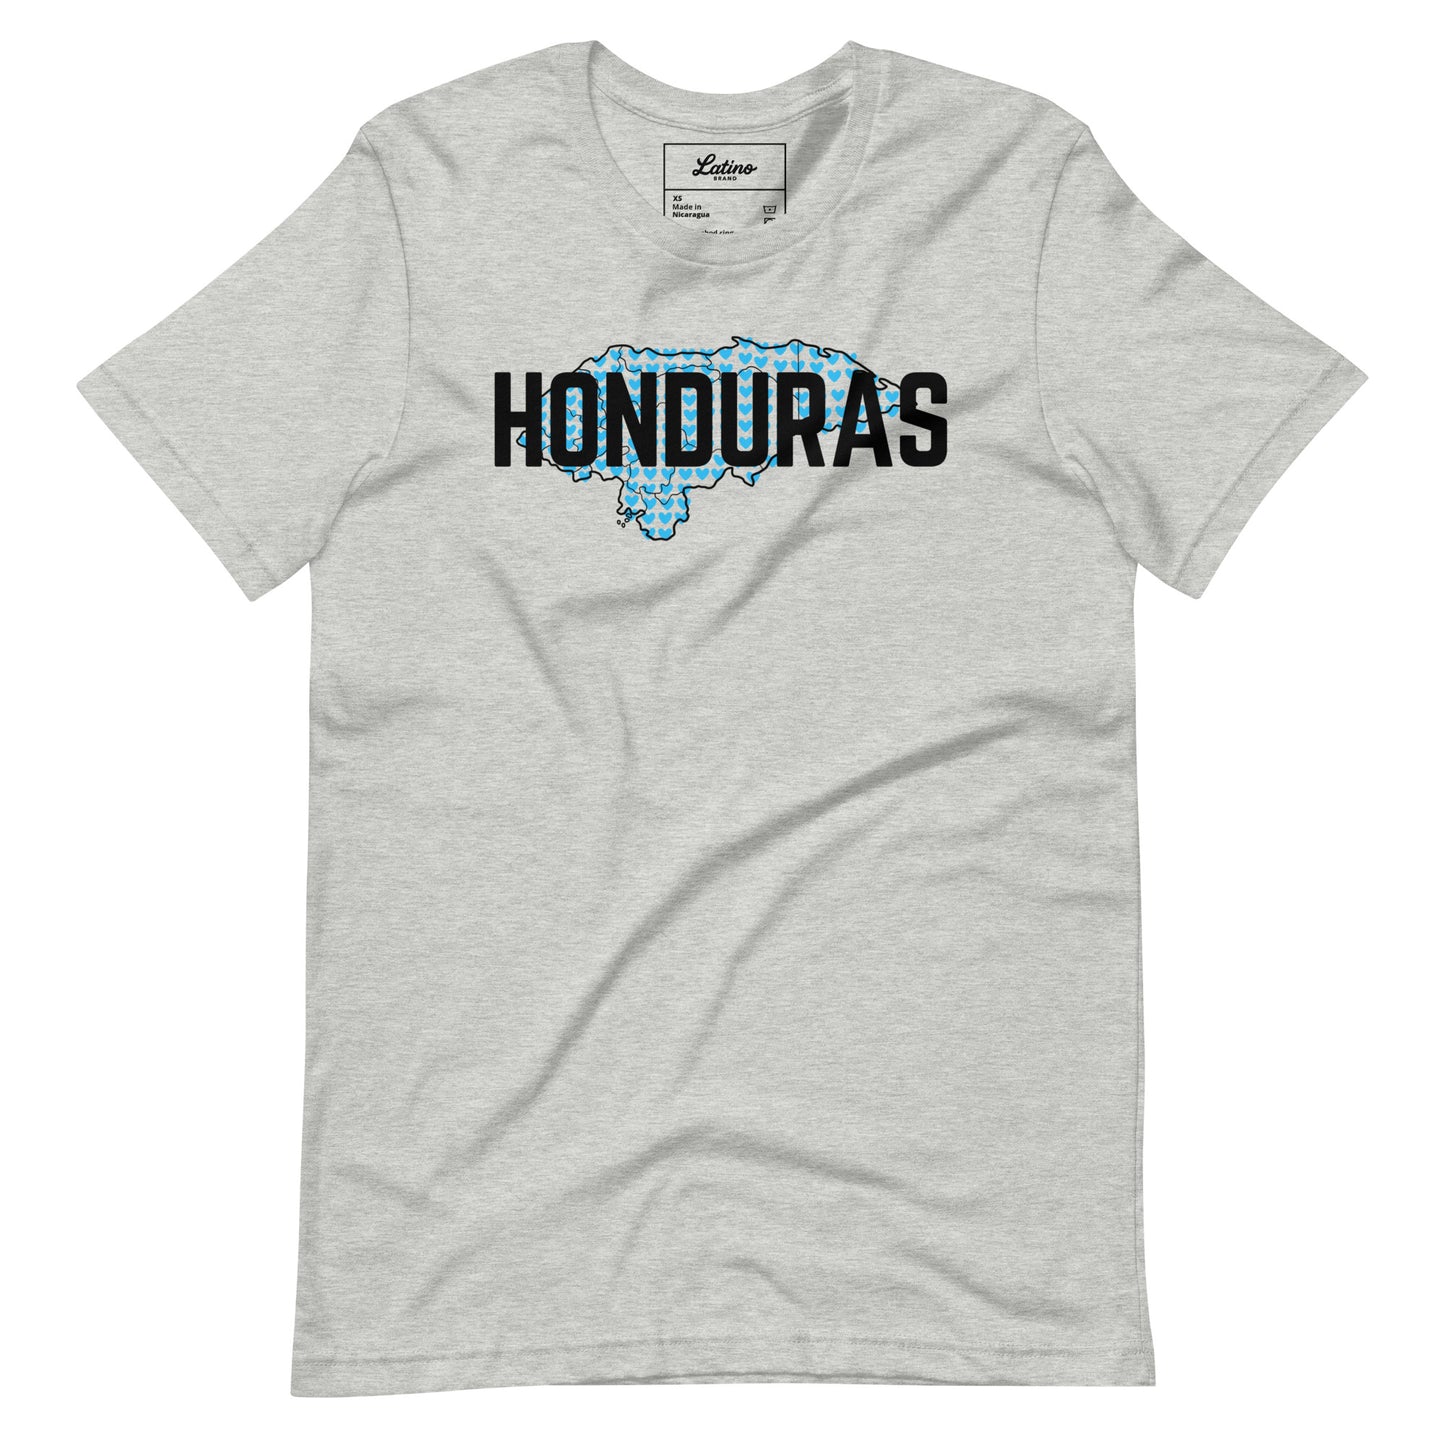 🇭🇳 Honduras Amor